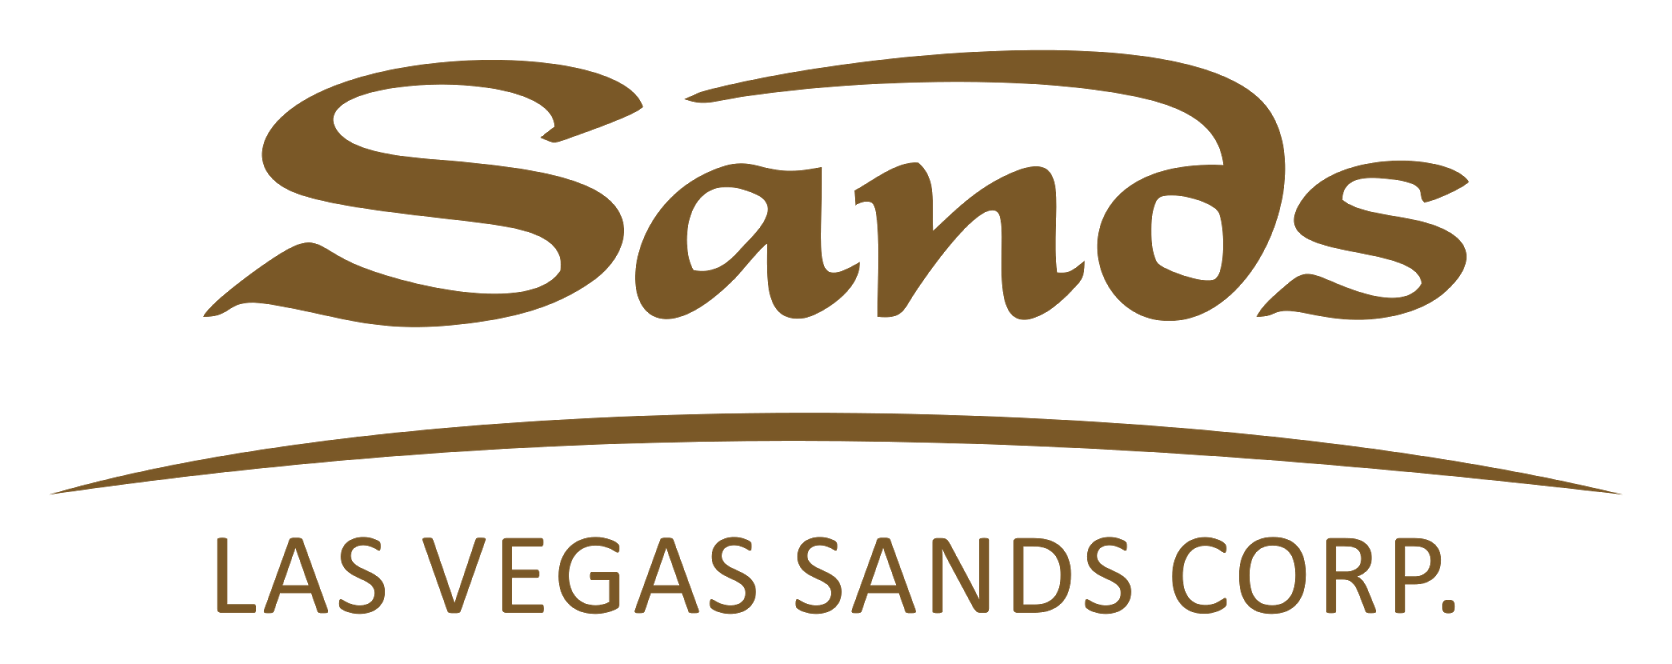 Las Vegas Sands Logo PNG Image